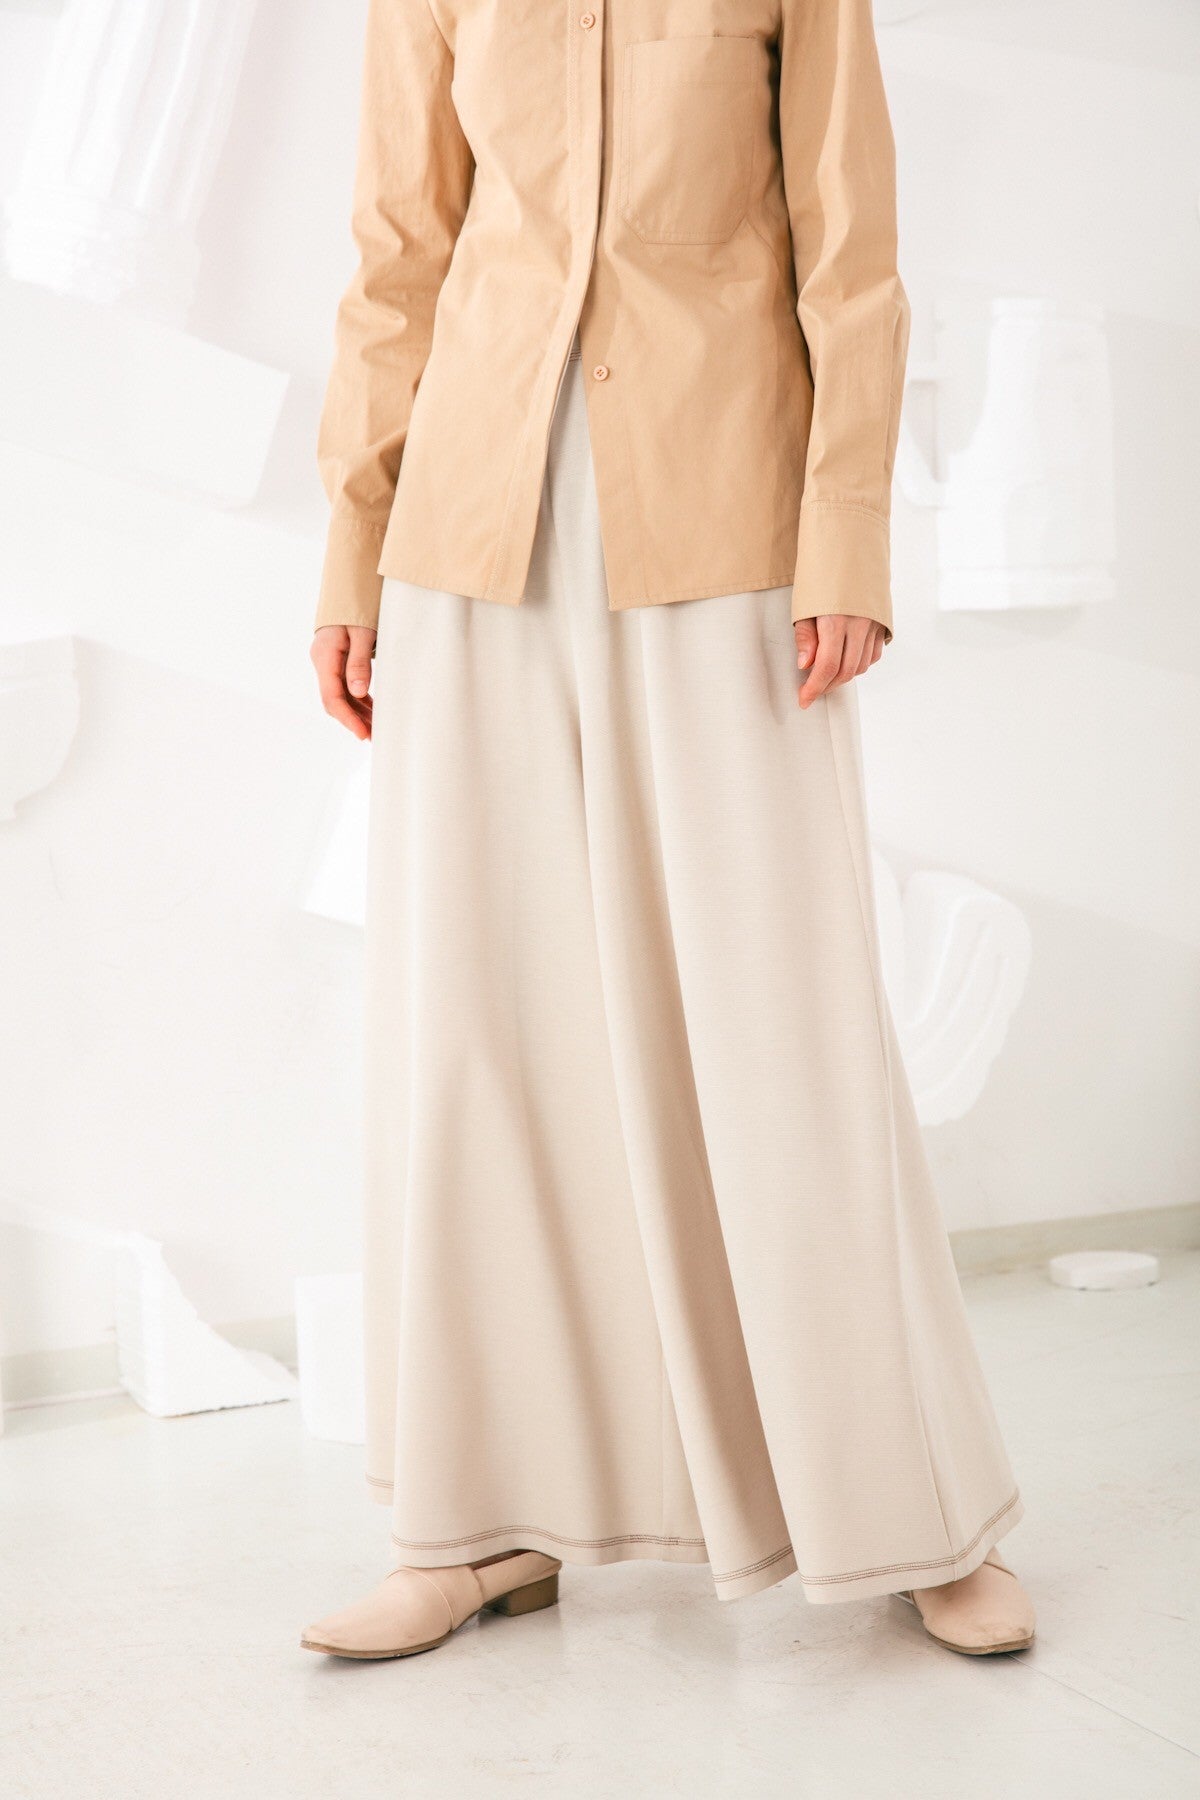 SKYE San Francisco SF shop ethical sustainable modern minimalist quality women clothing fashion Stéphane Pants beige 2